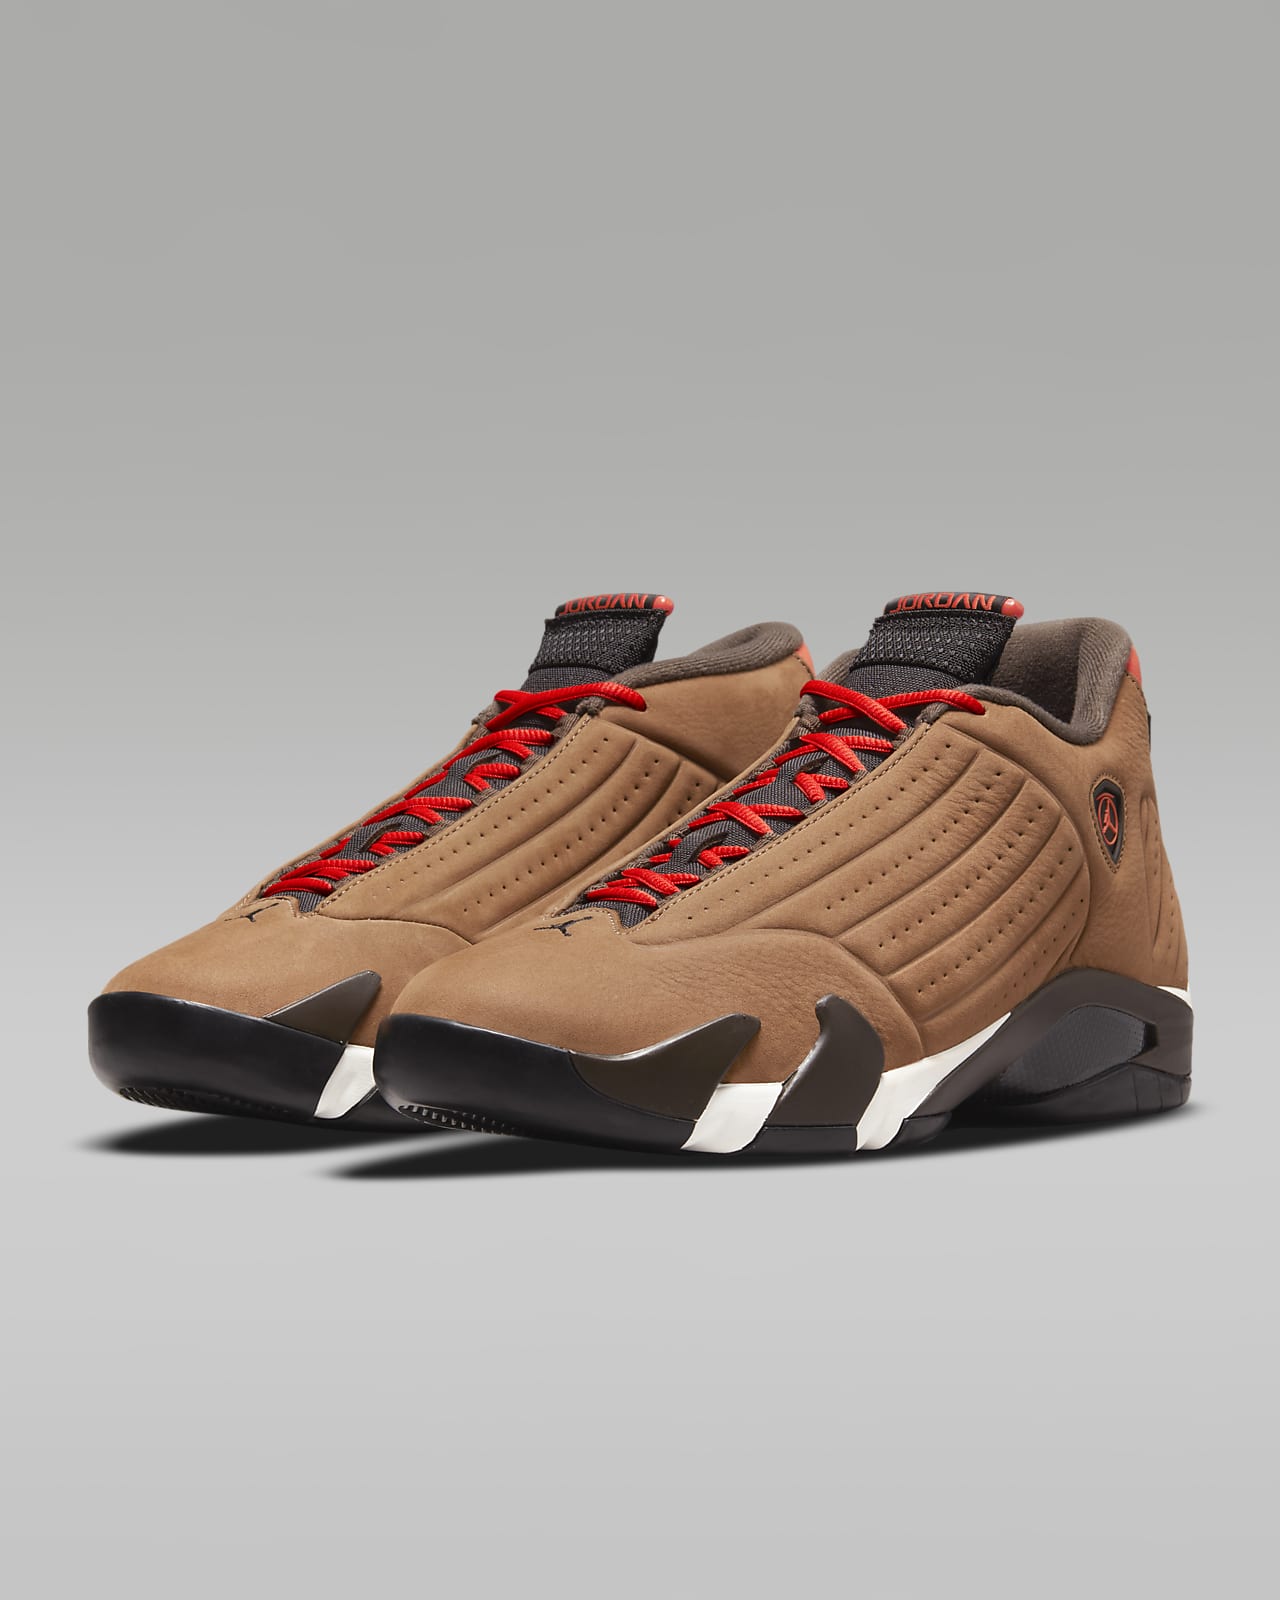 Air Jordan 14 Retro SE Men's Shoe